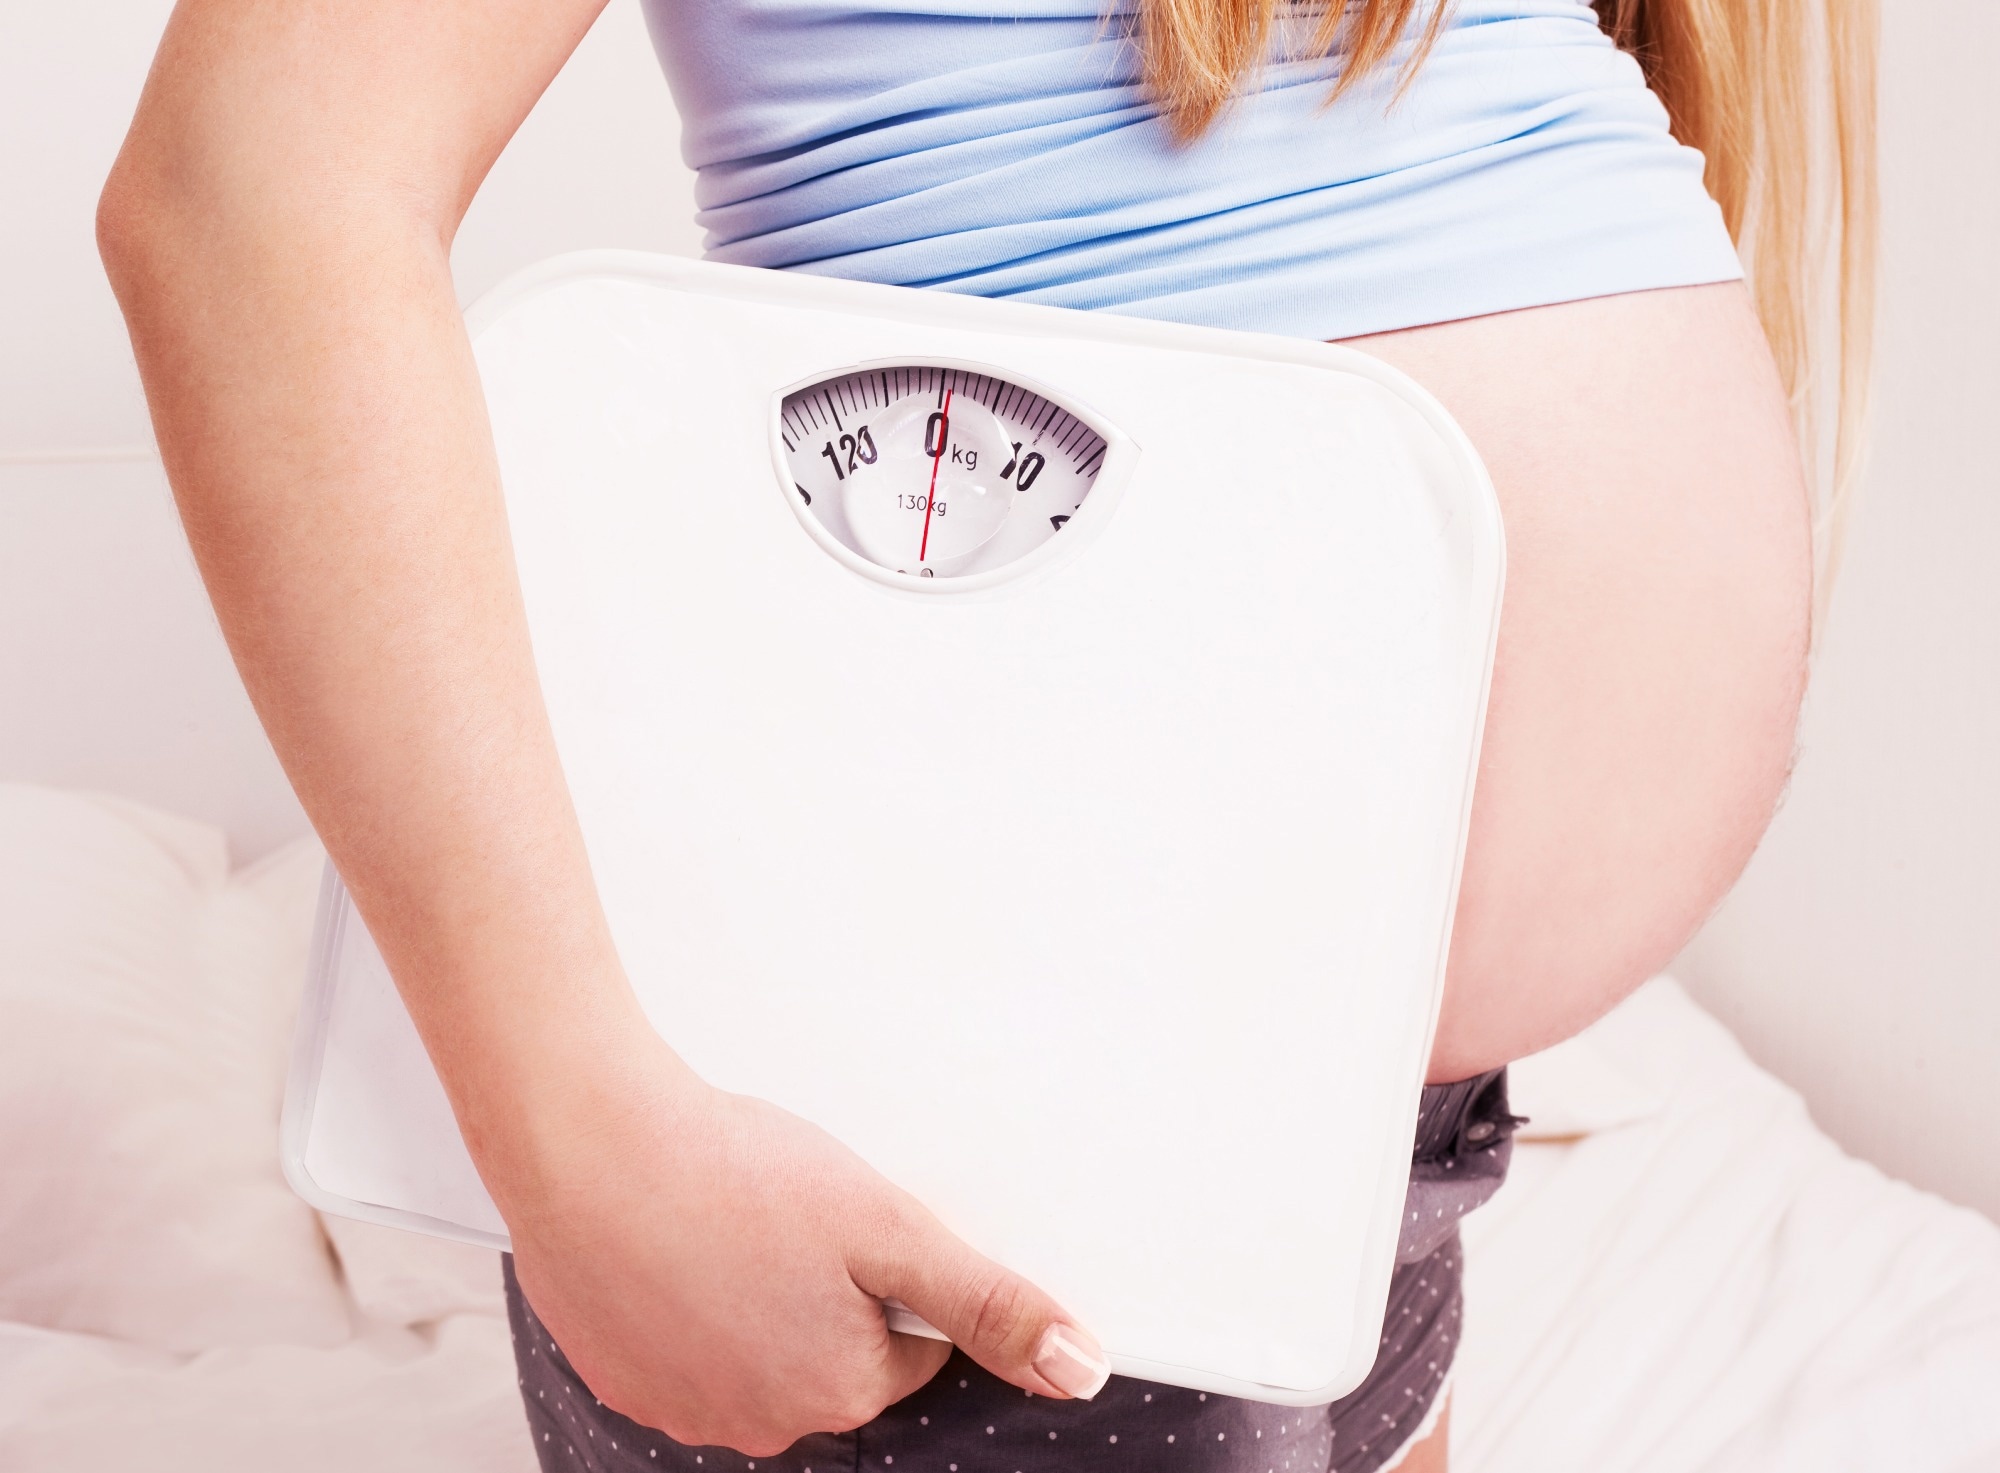 Benefits of postpartum dietary intervention on weight management in obese women